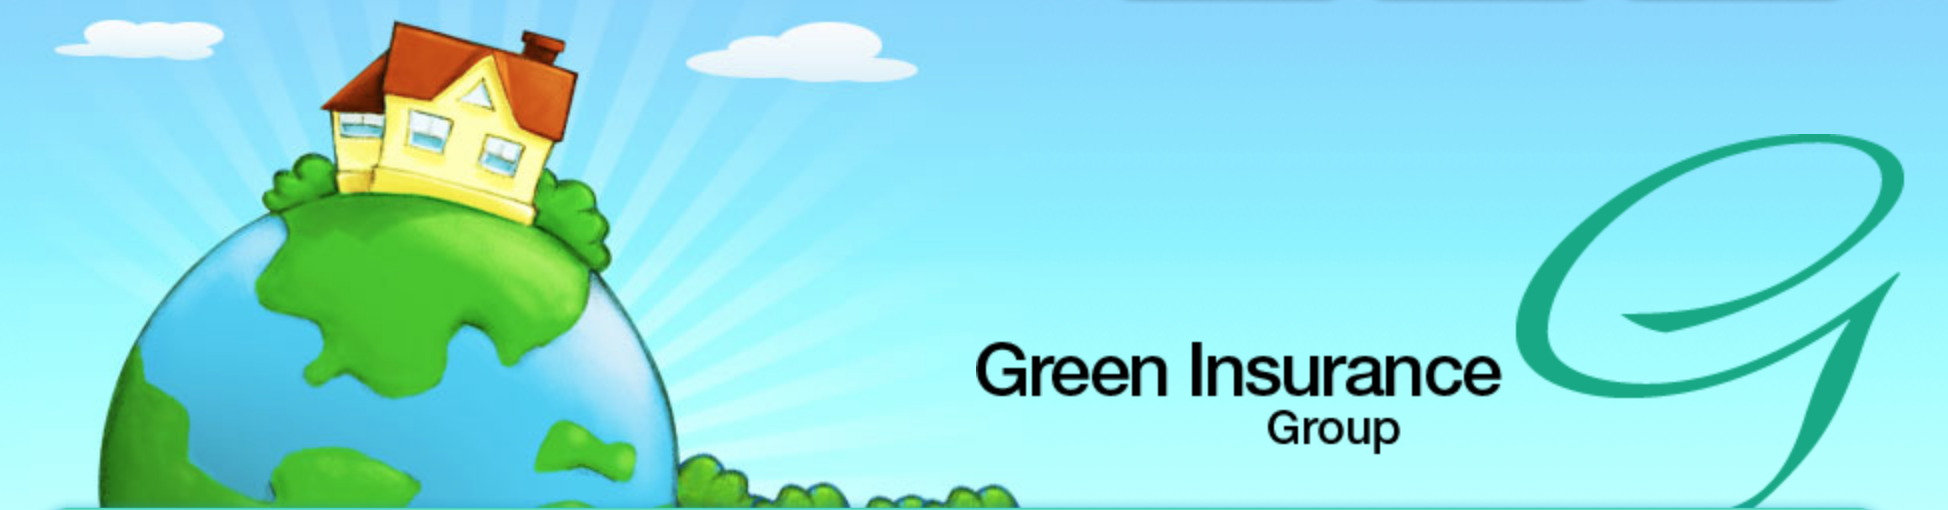 Green Insurance logo